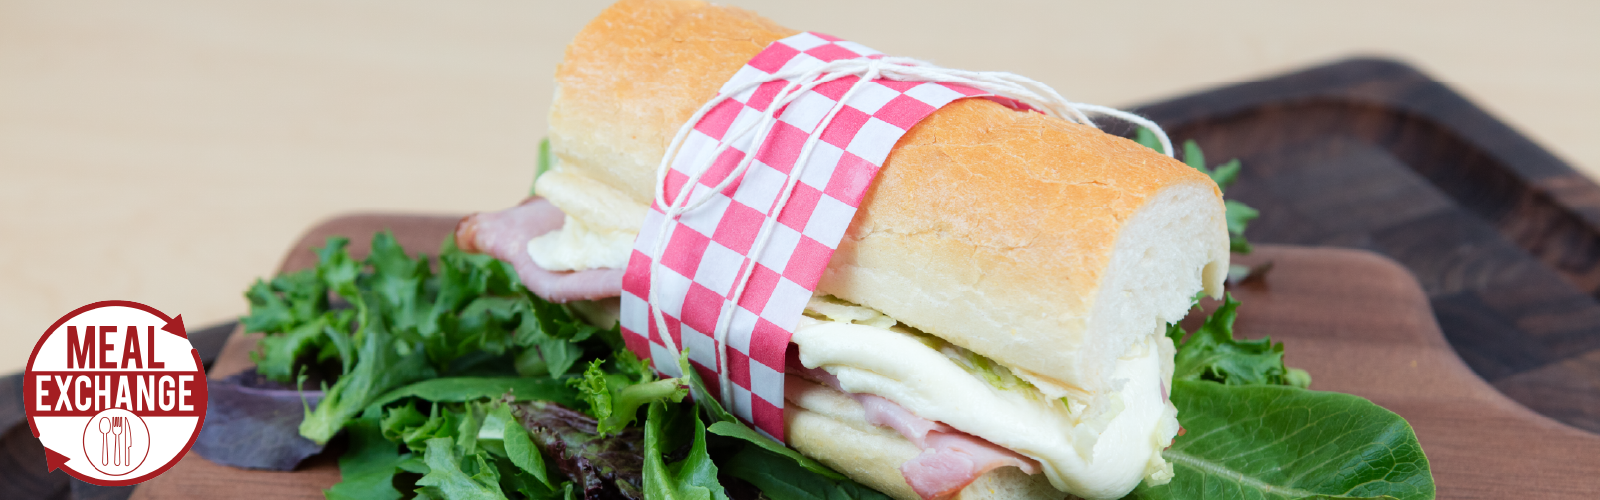 sub sandwich displayed